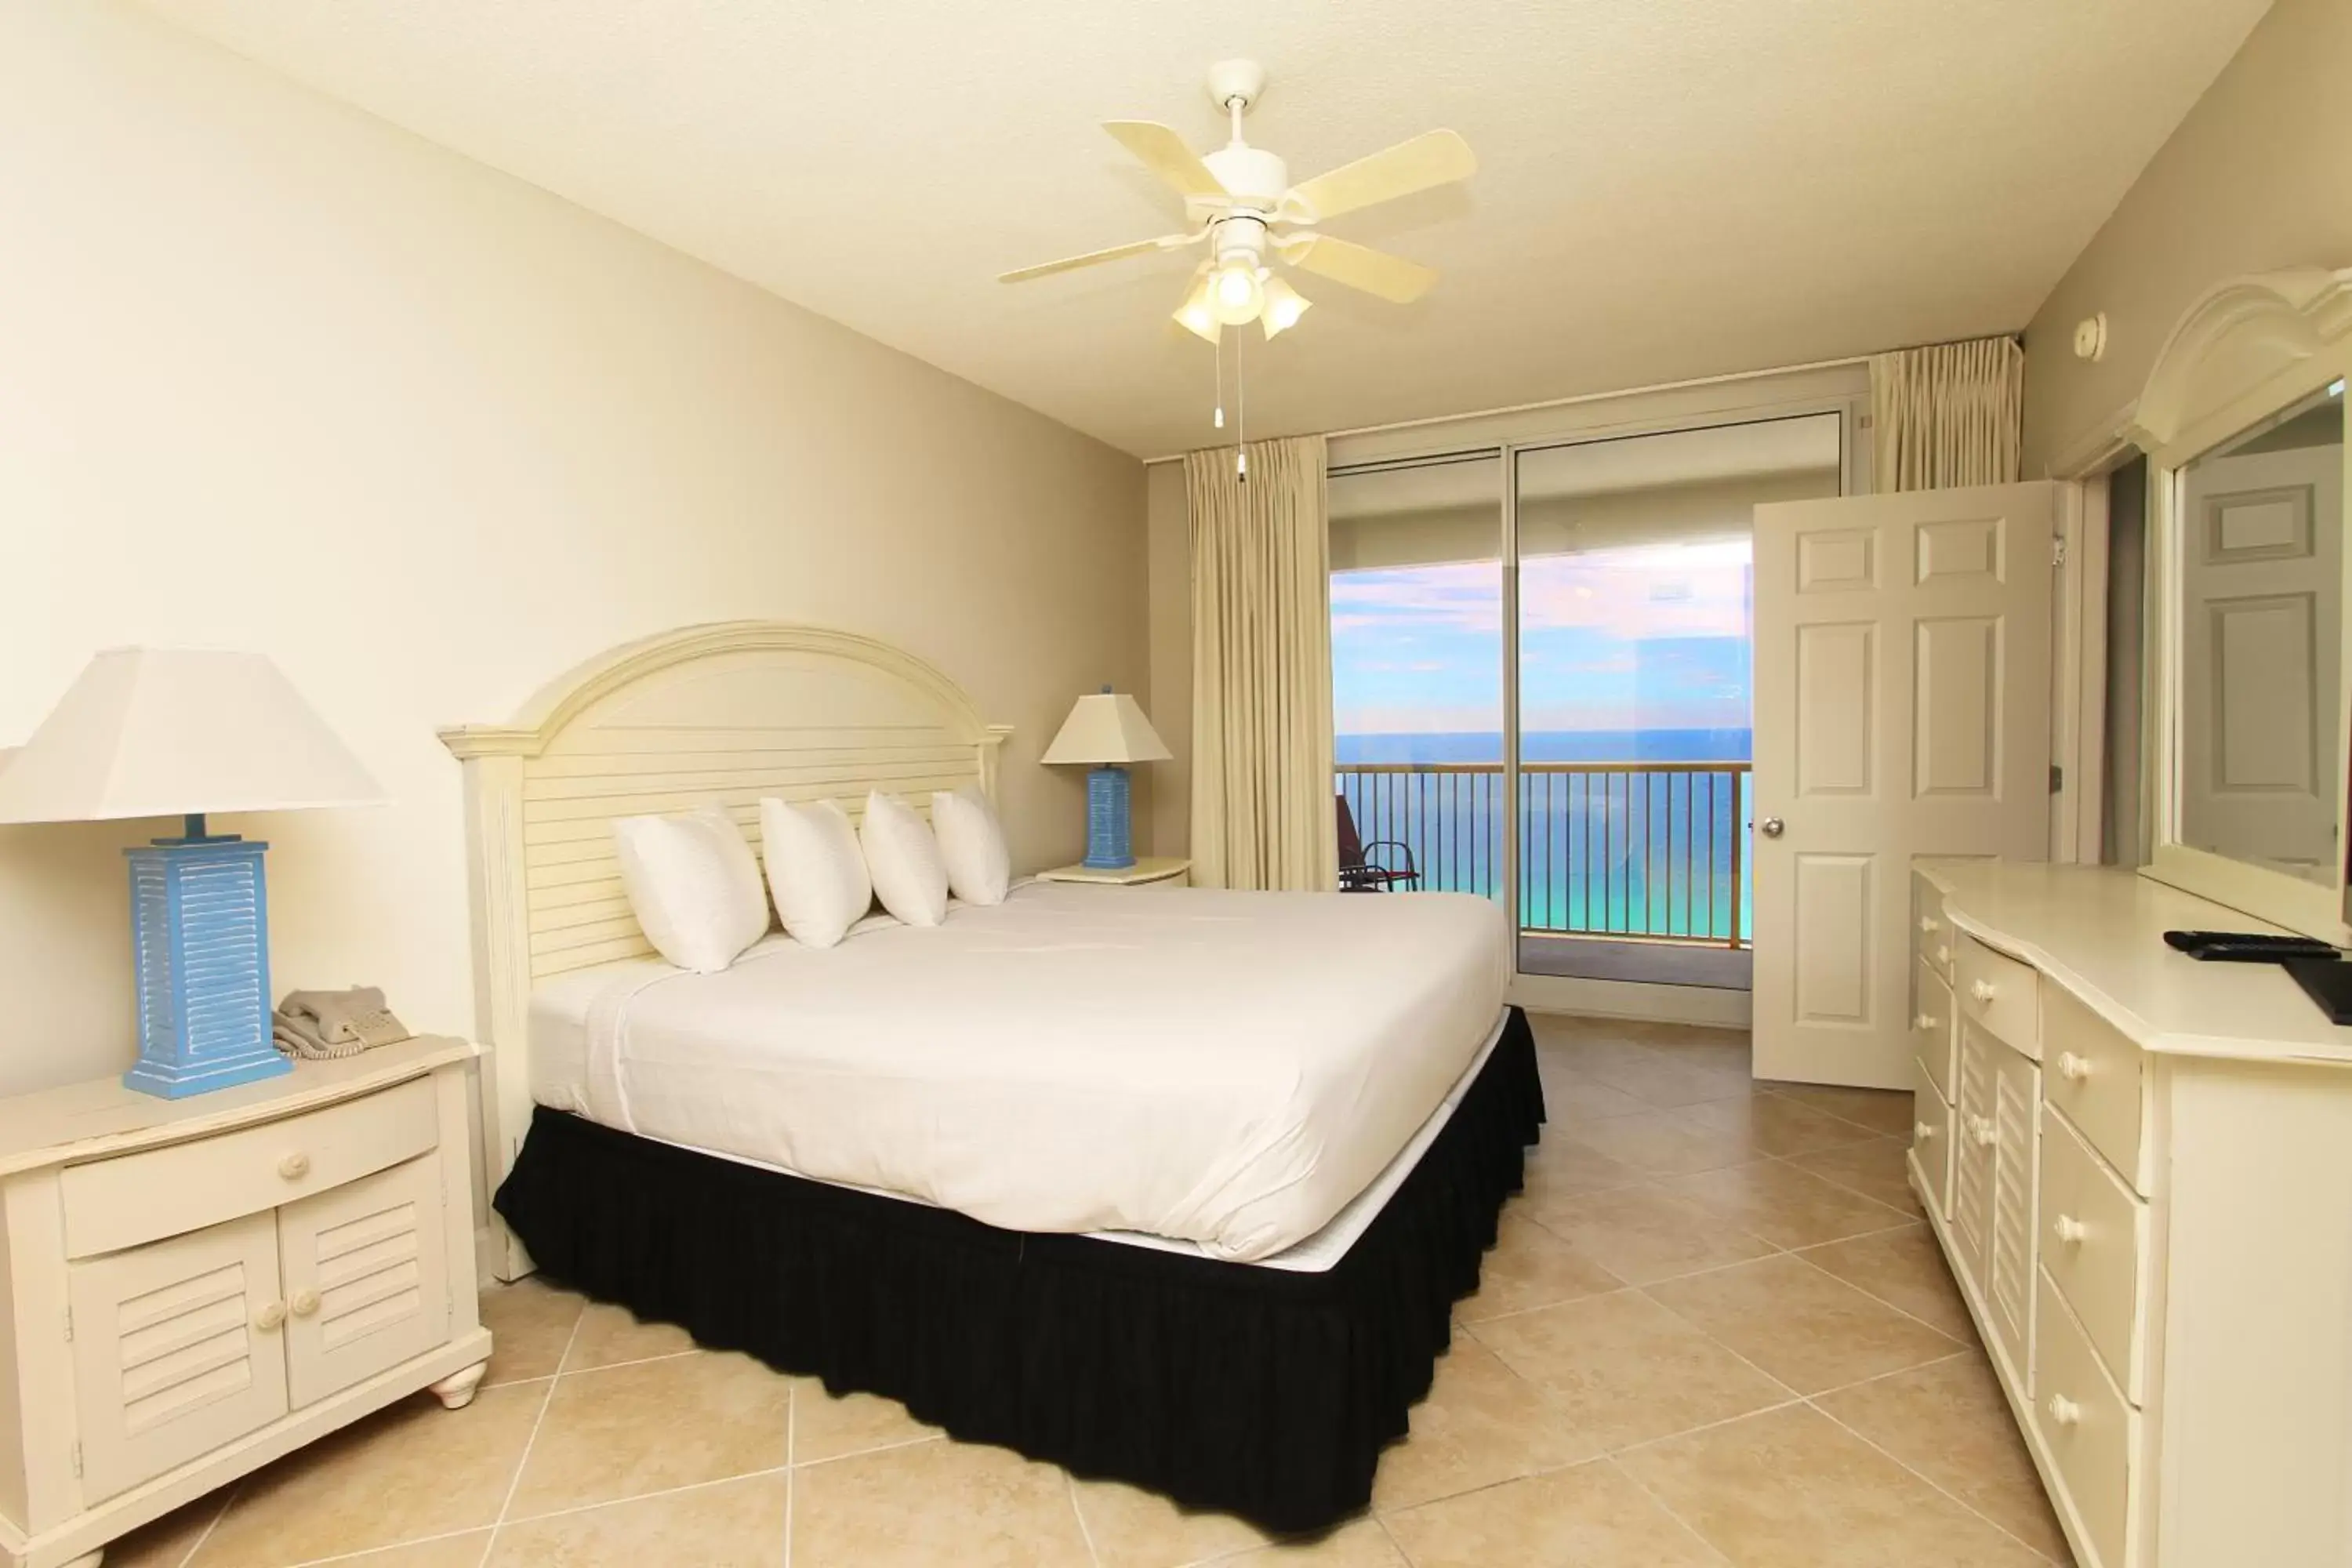 Bed in Majestic Beach Resort, Panama City Beach, Fl